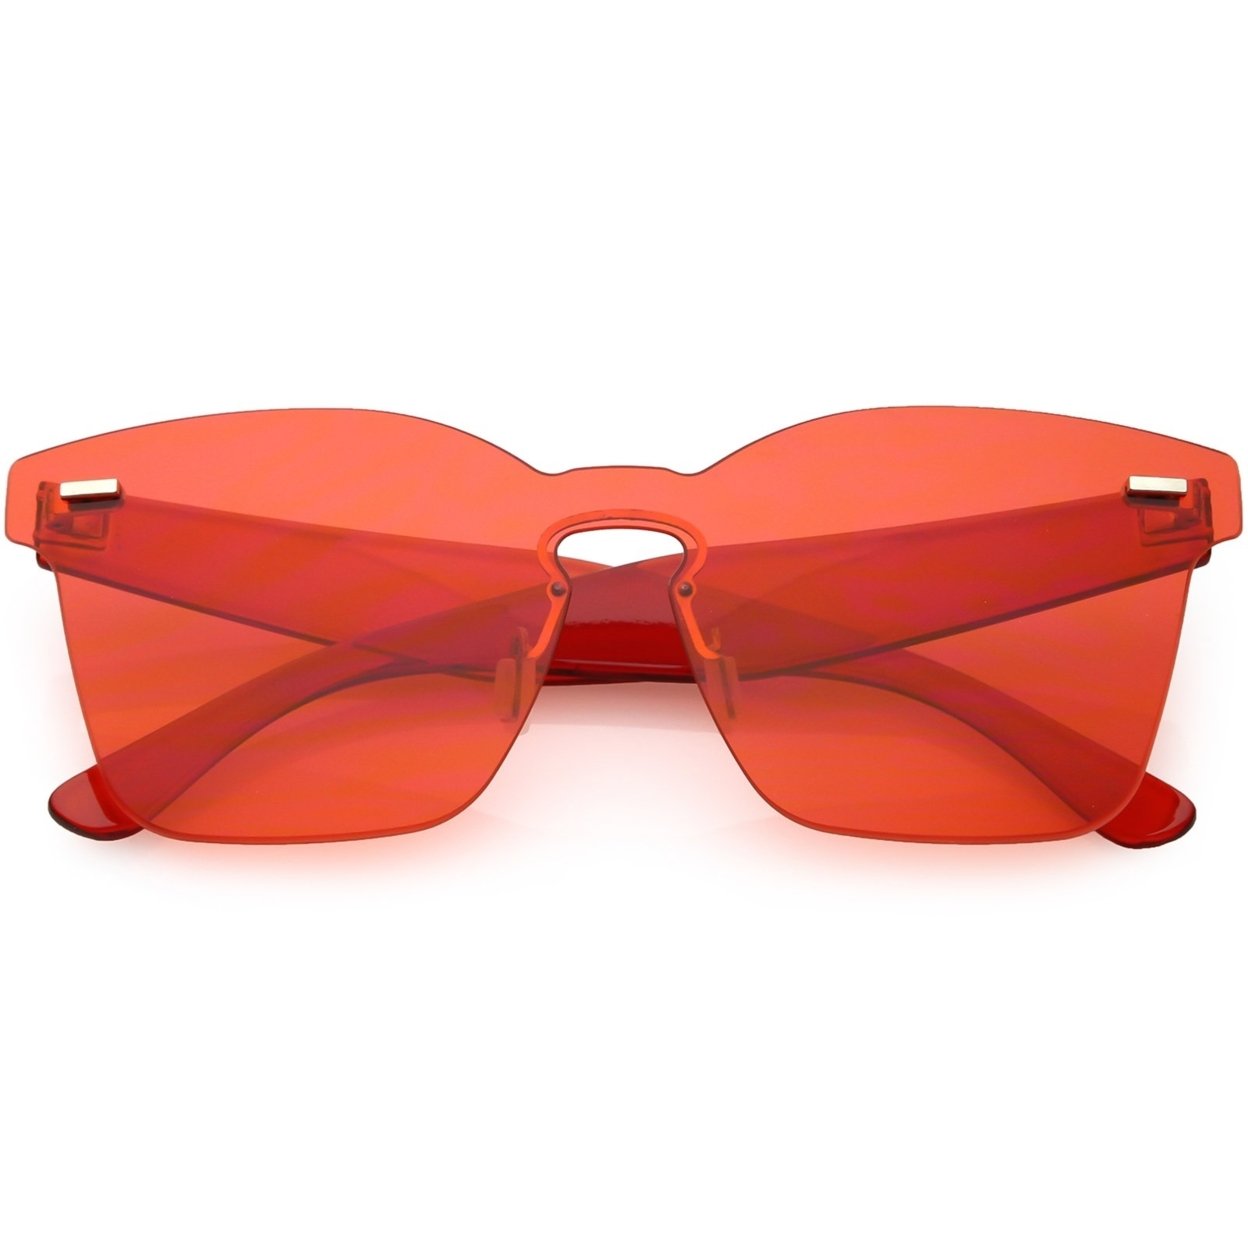 Oversize Rimless Horn Rimmed Sunglasses Keyhole Nose Bridge Mono Flat Lens 59mm - Smoke Clear